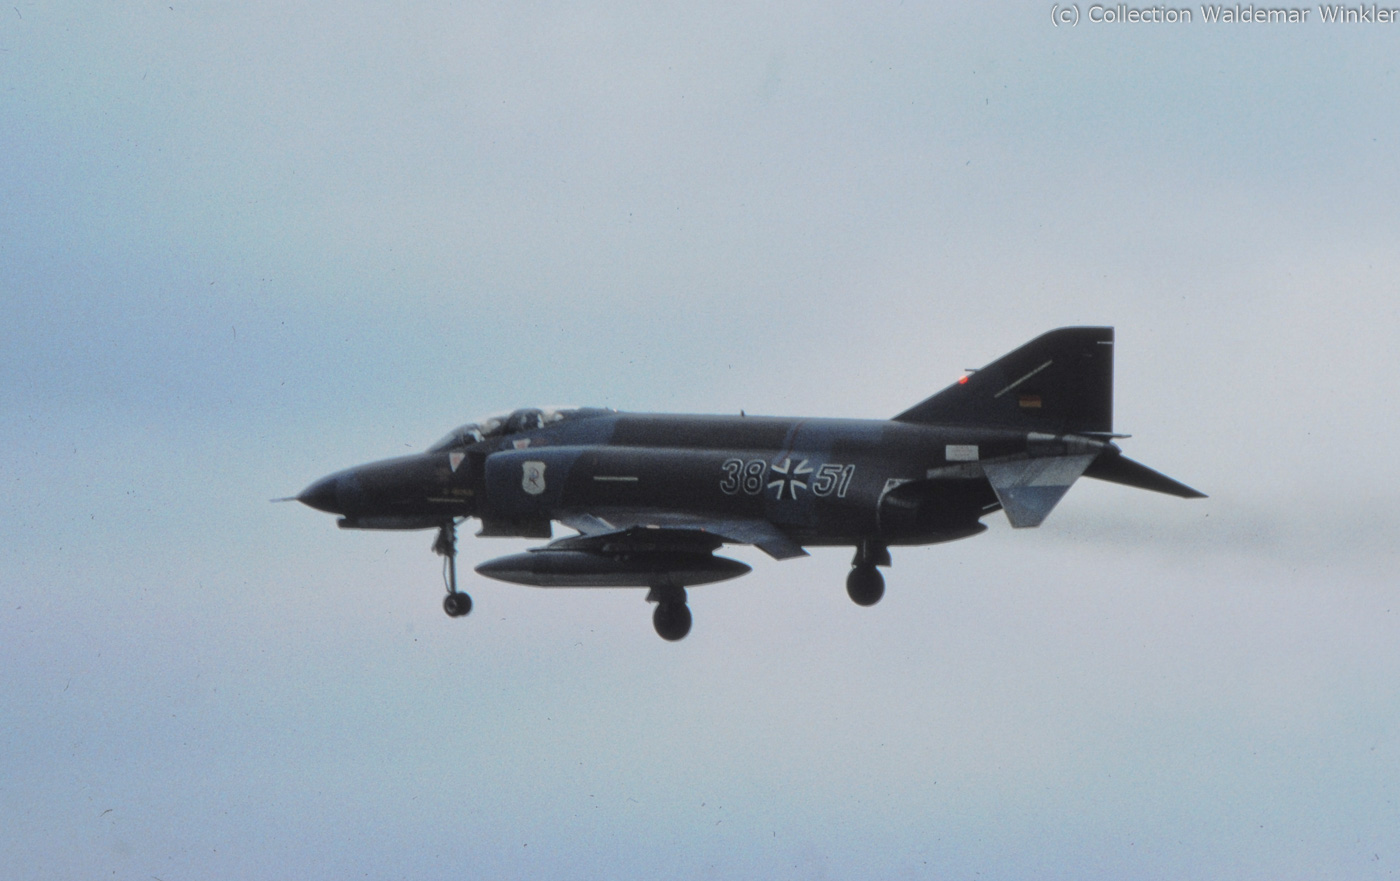 F-4_Phantom_II_DSC_1356.jpg